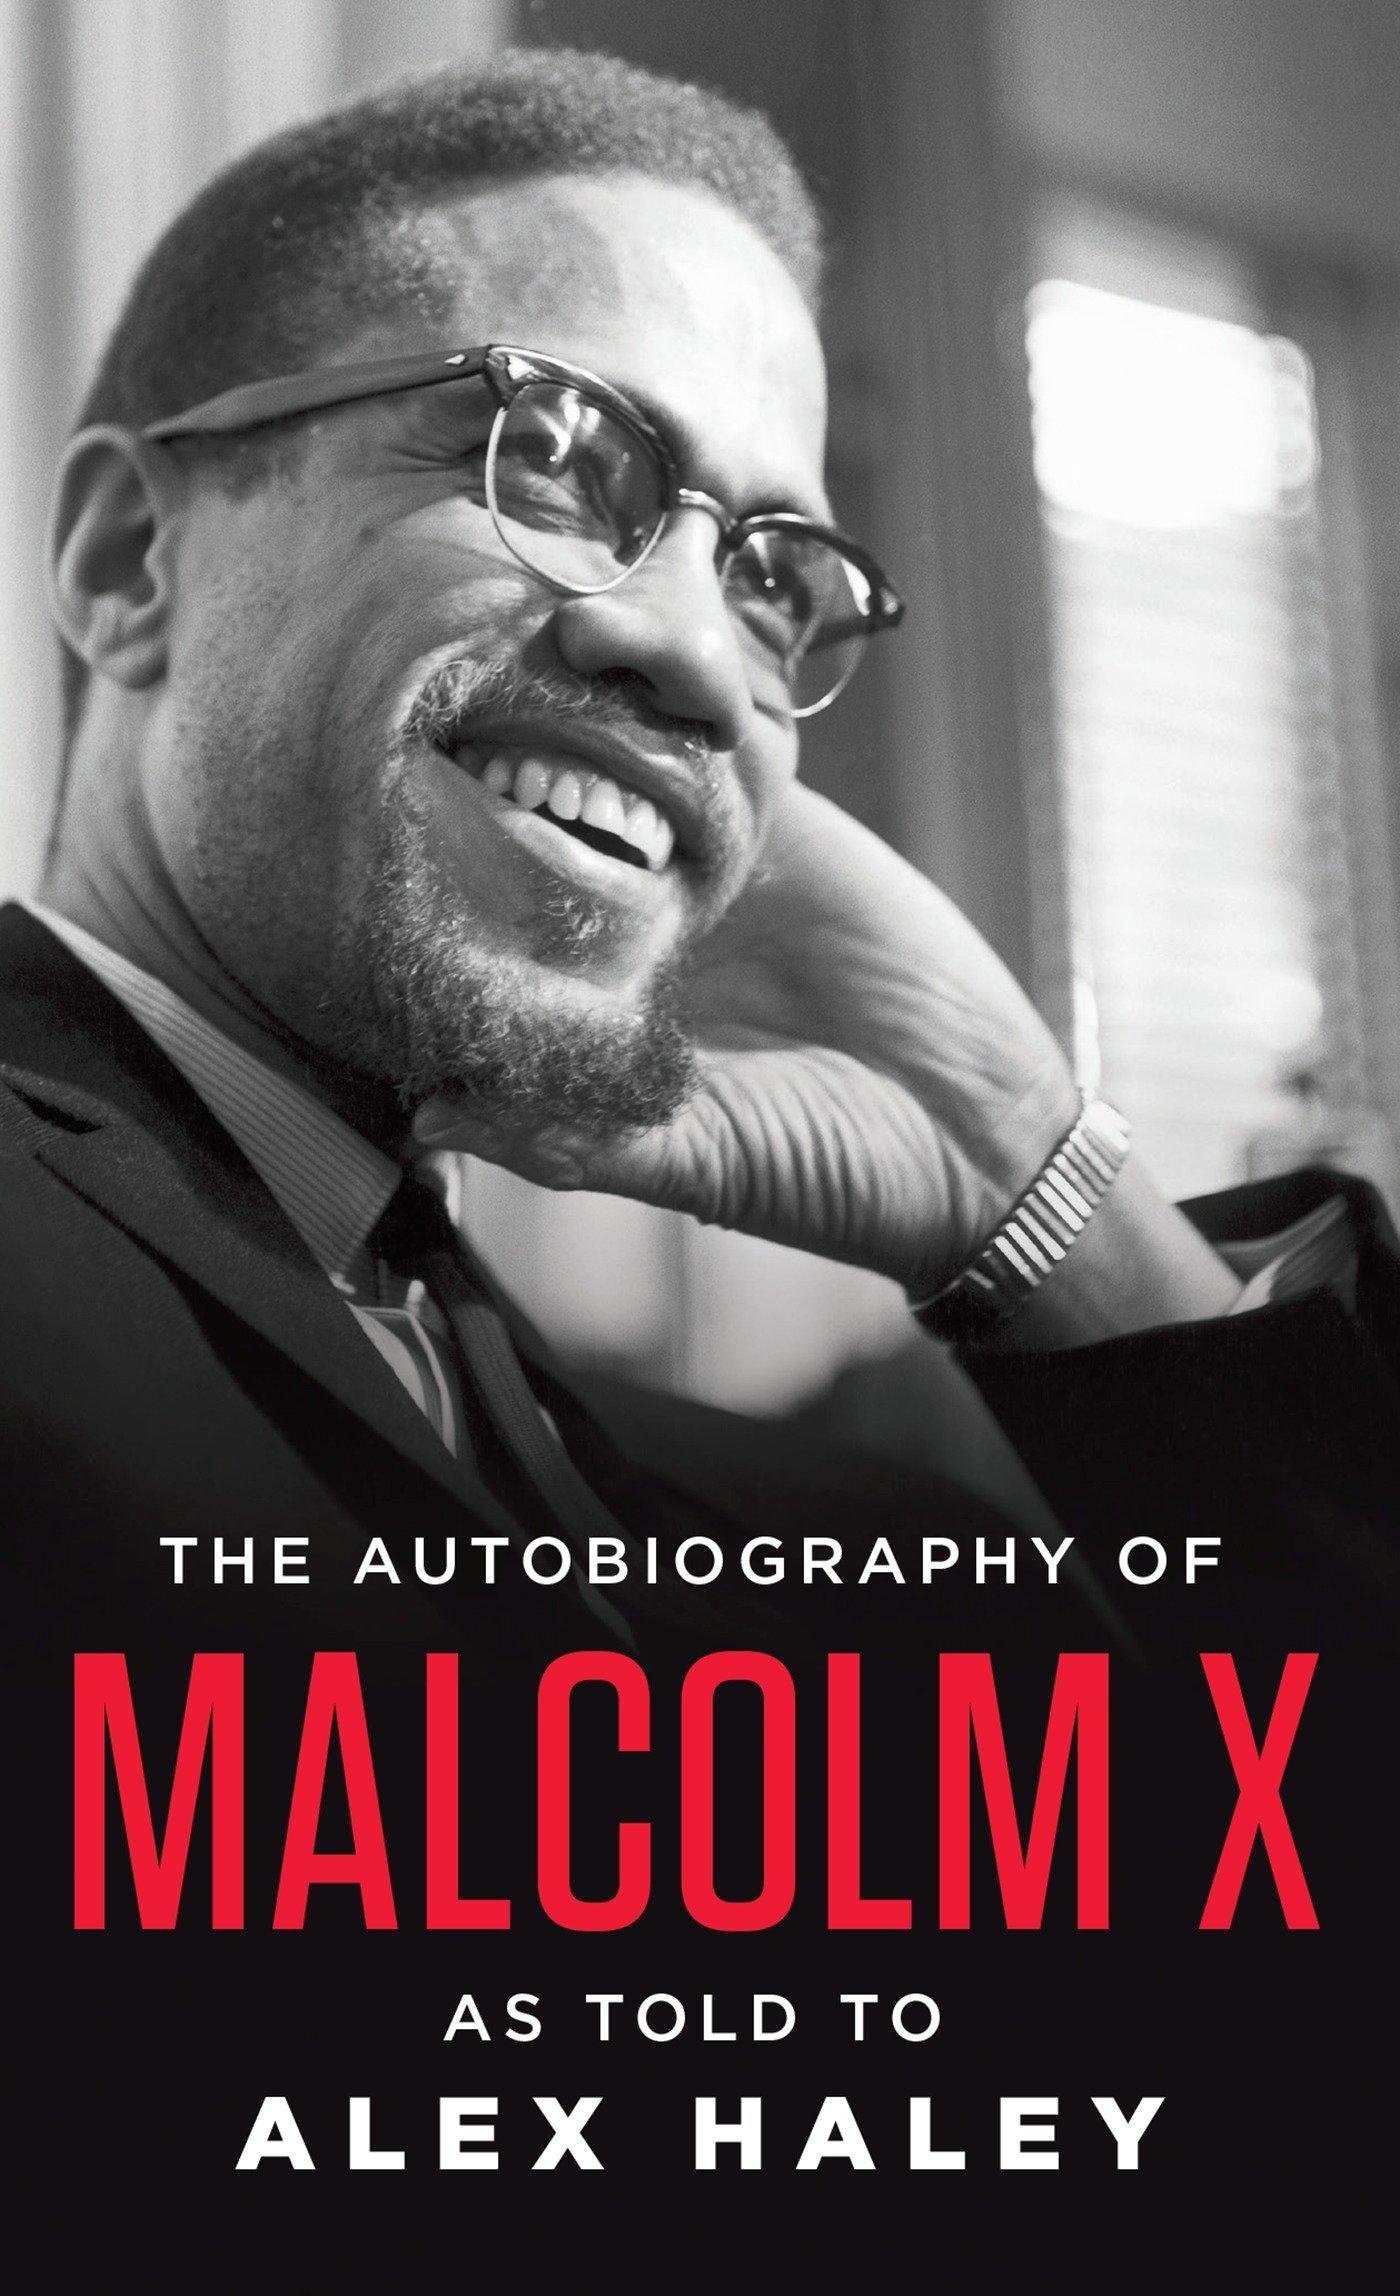 'The Autobiography of Malcom X' by Malcom X